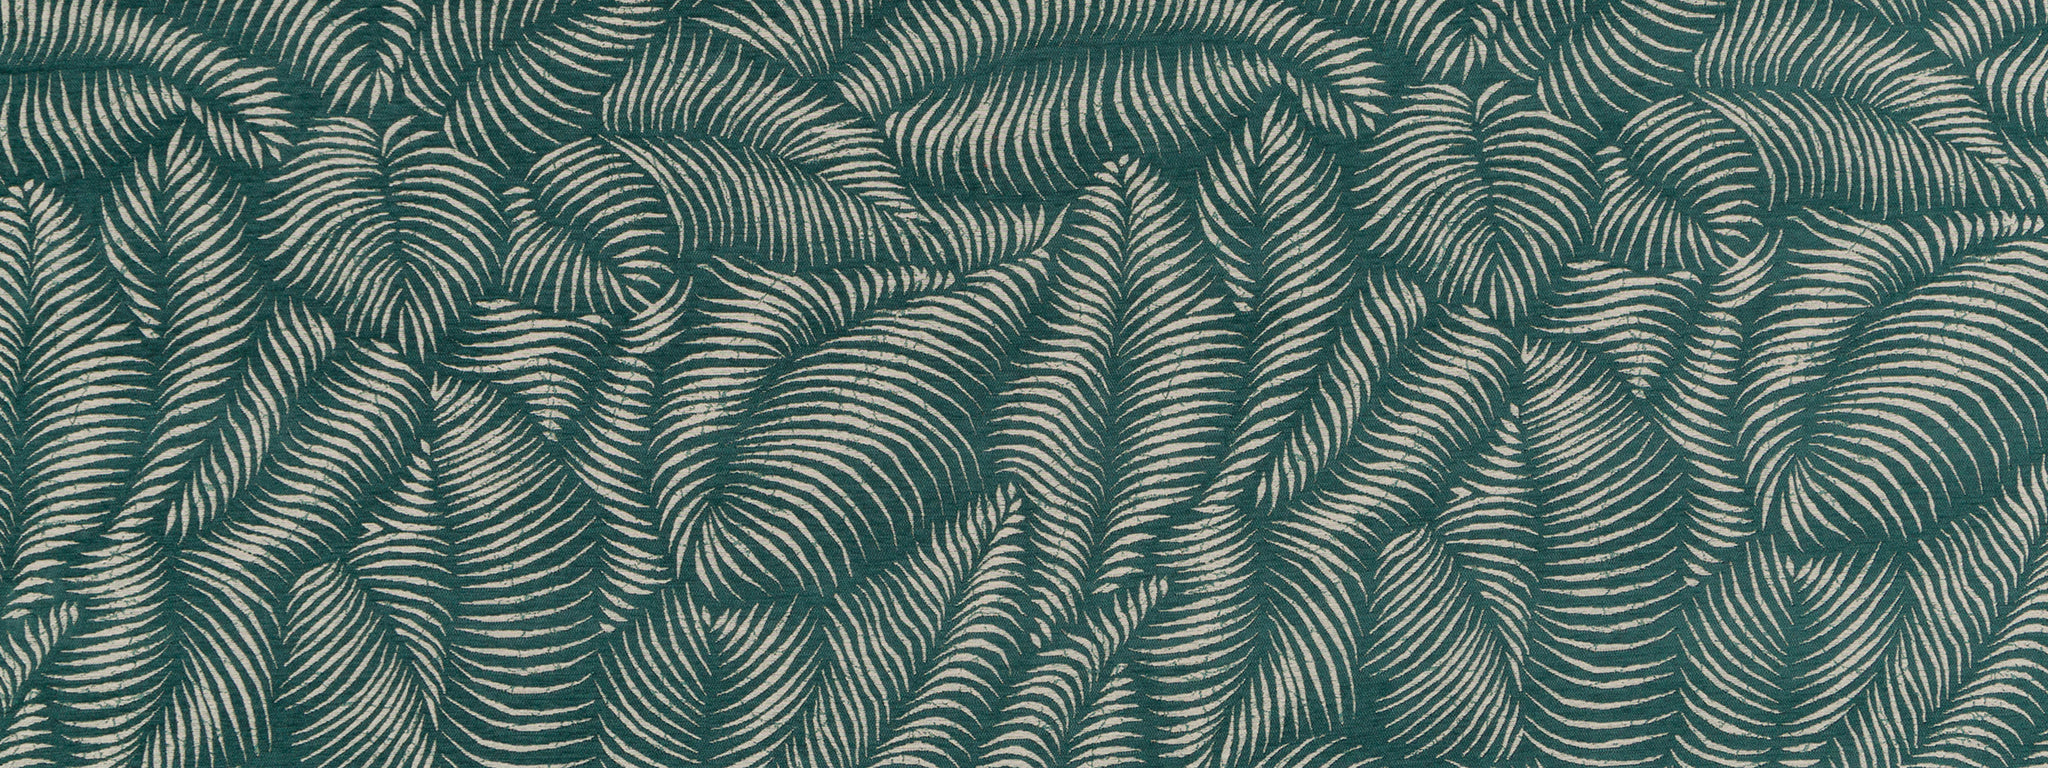 Tropic Ferns Bk | Jasper